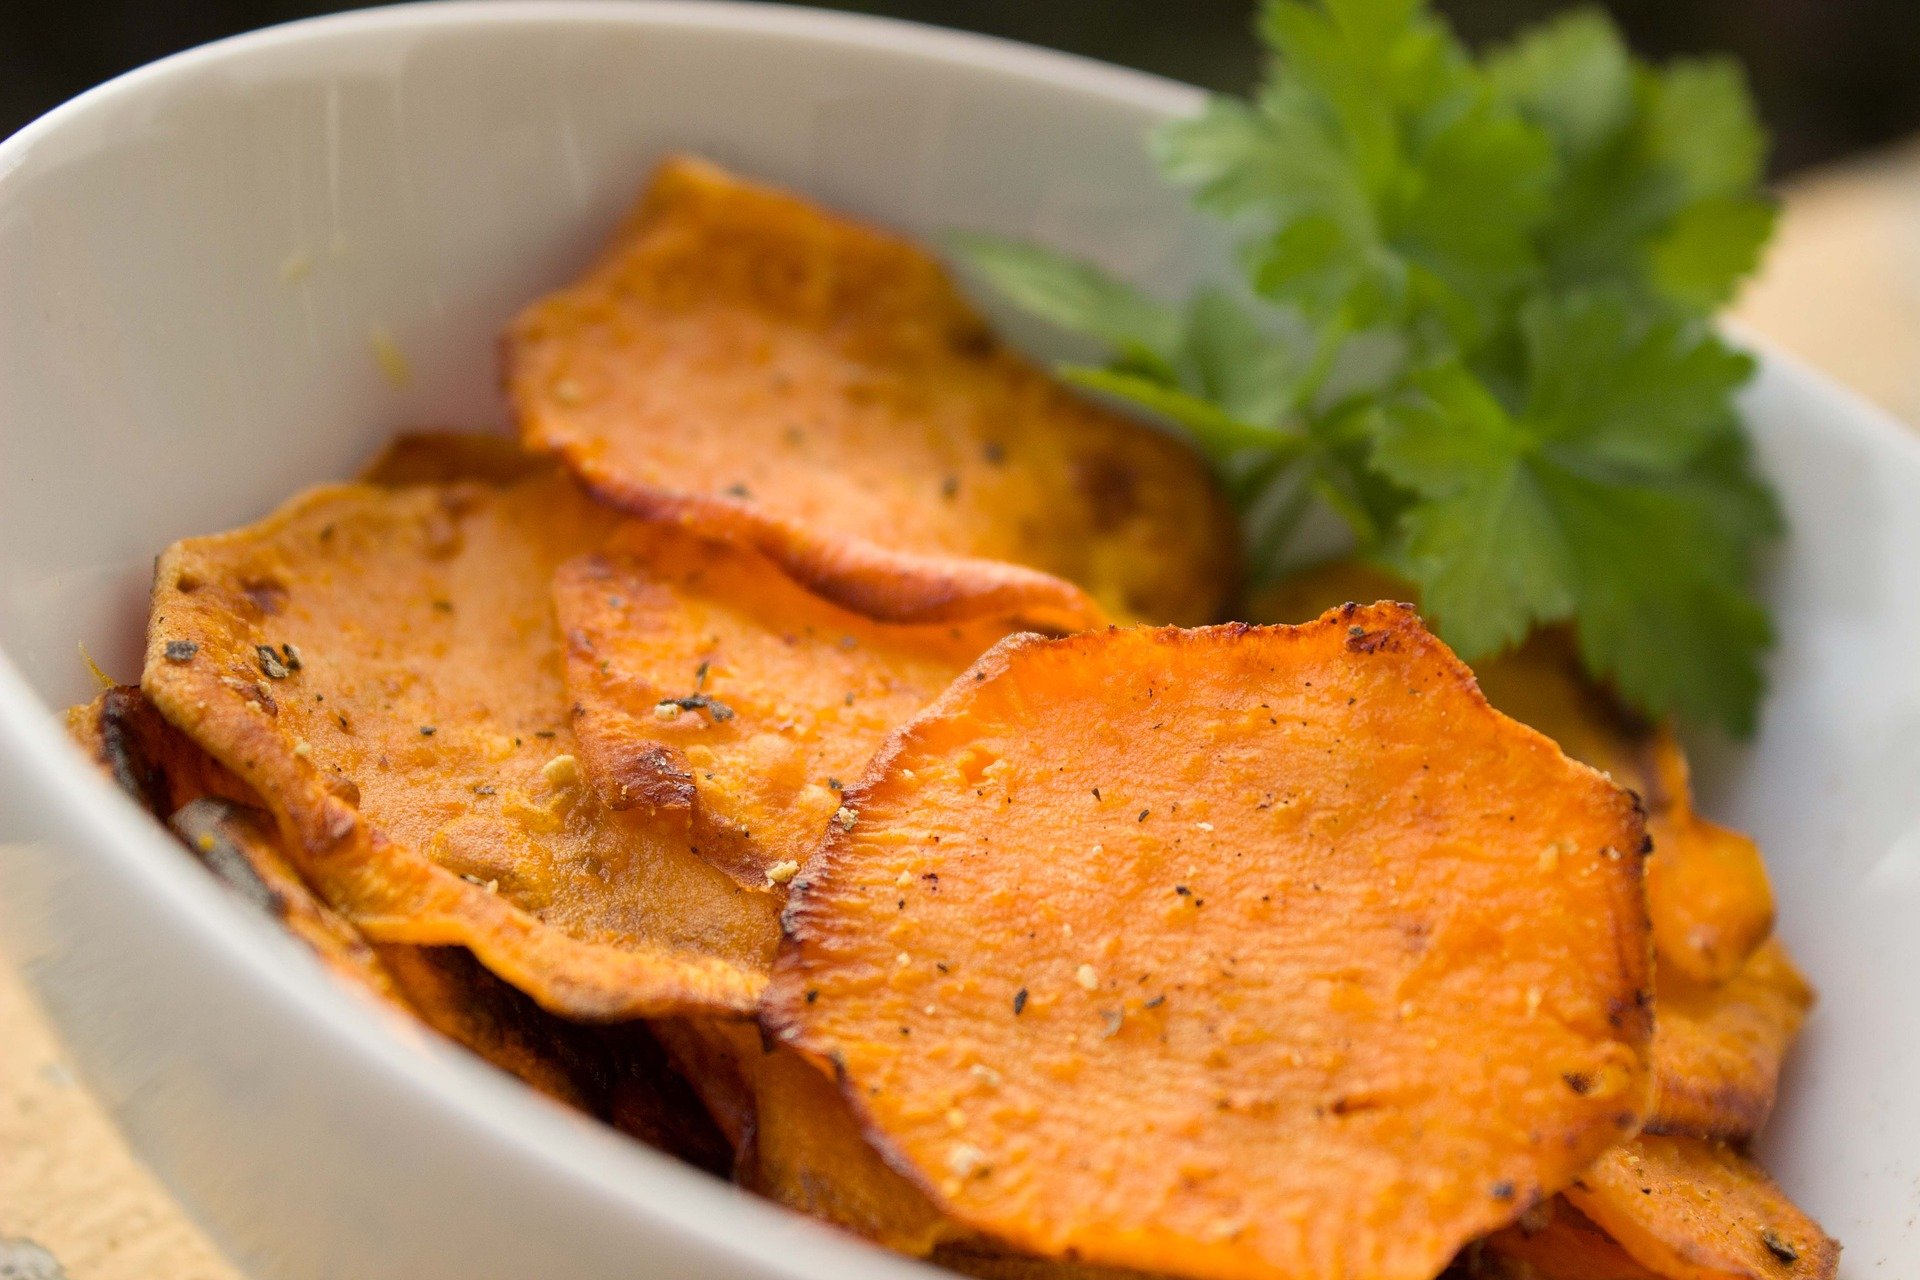 sweet potato chips - Image by Bernadette Wurzinger from Pixabay